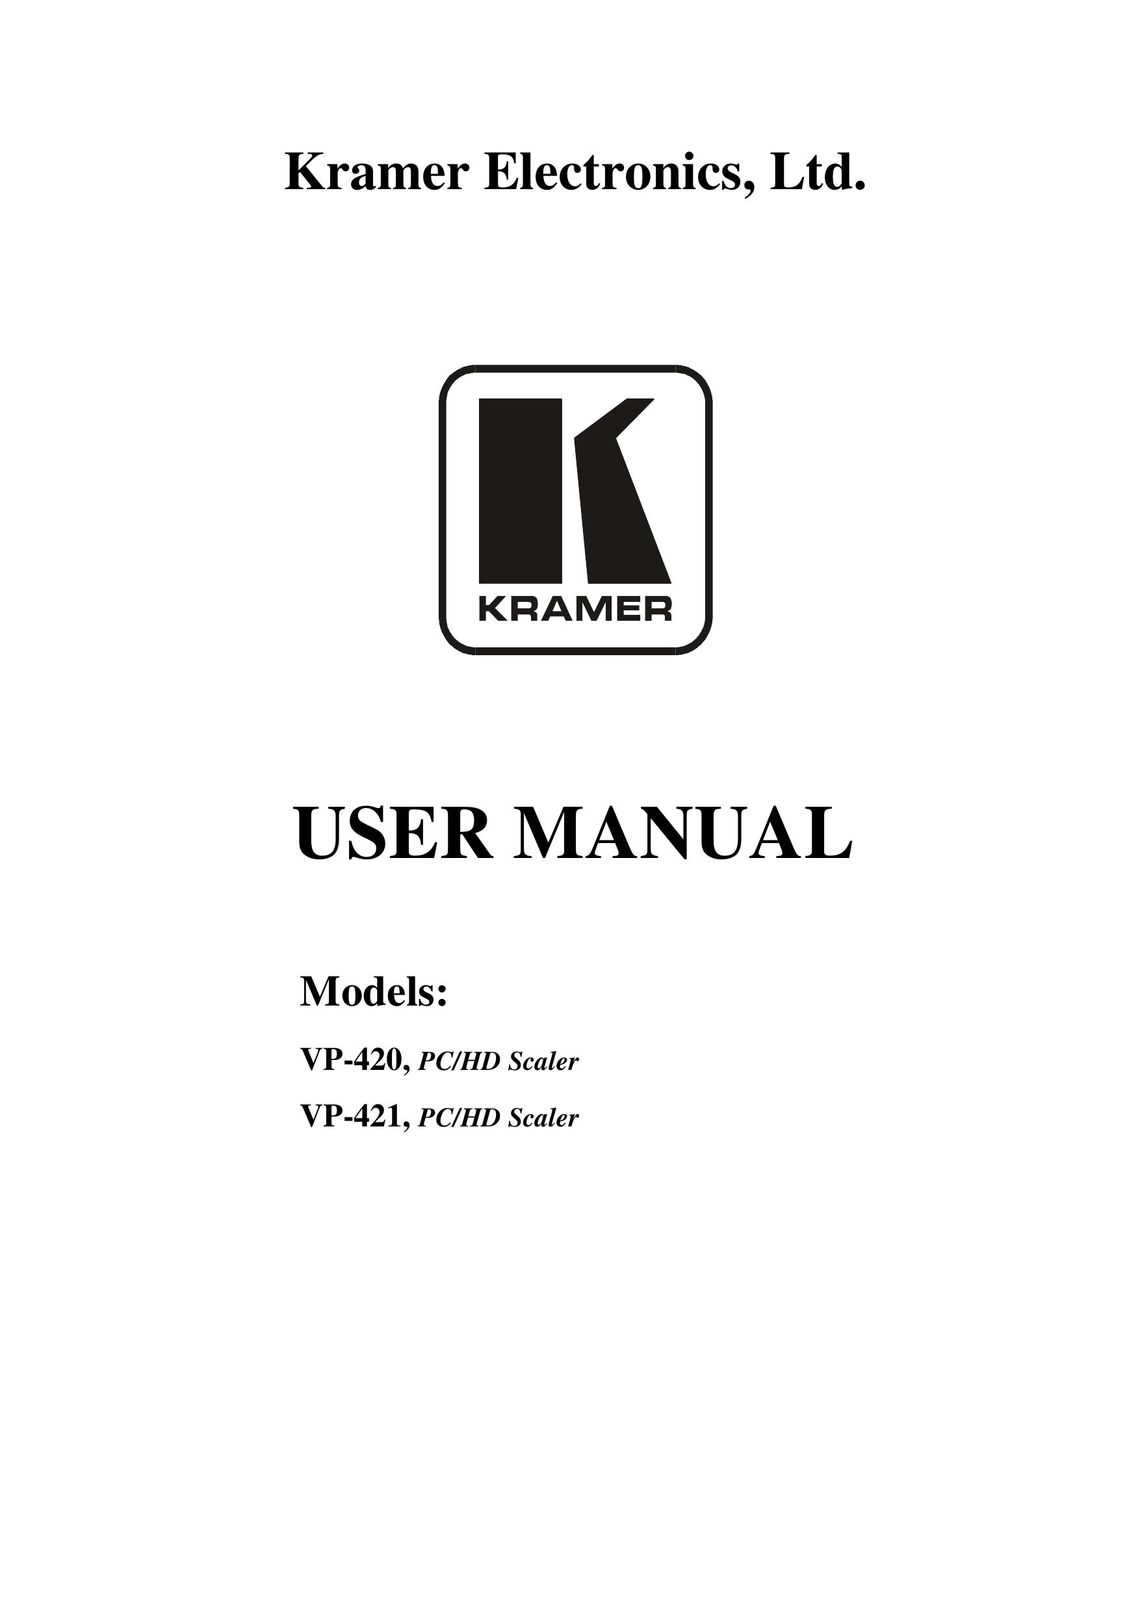 Kramer Electronics VP-420 Food Saver User Manual